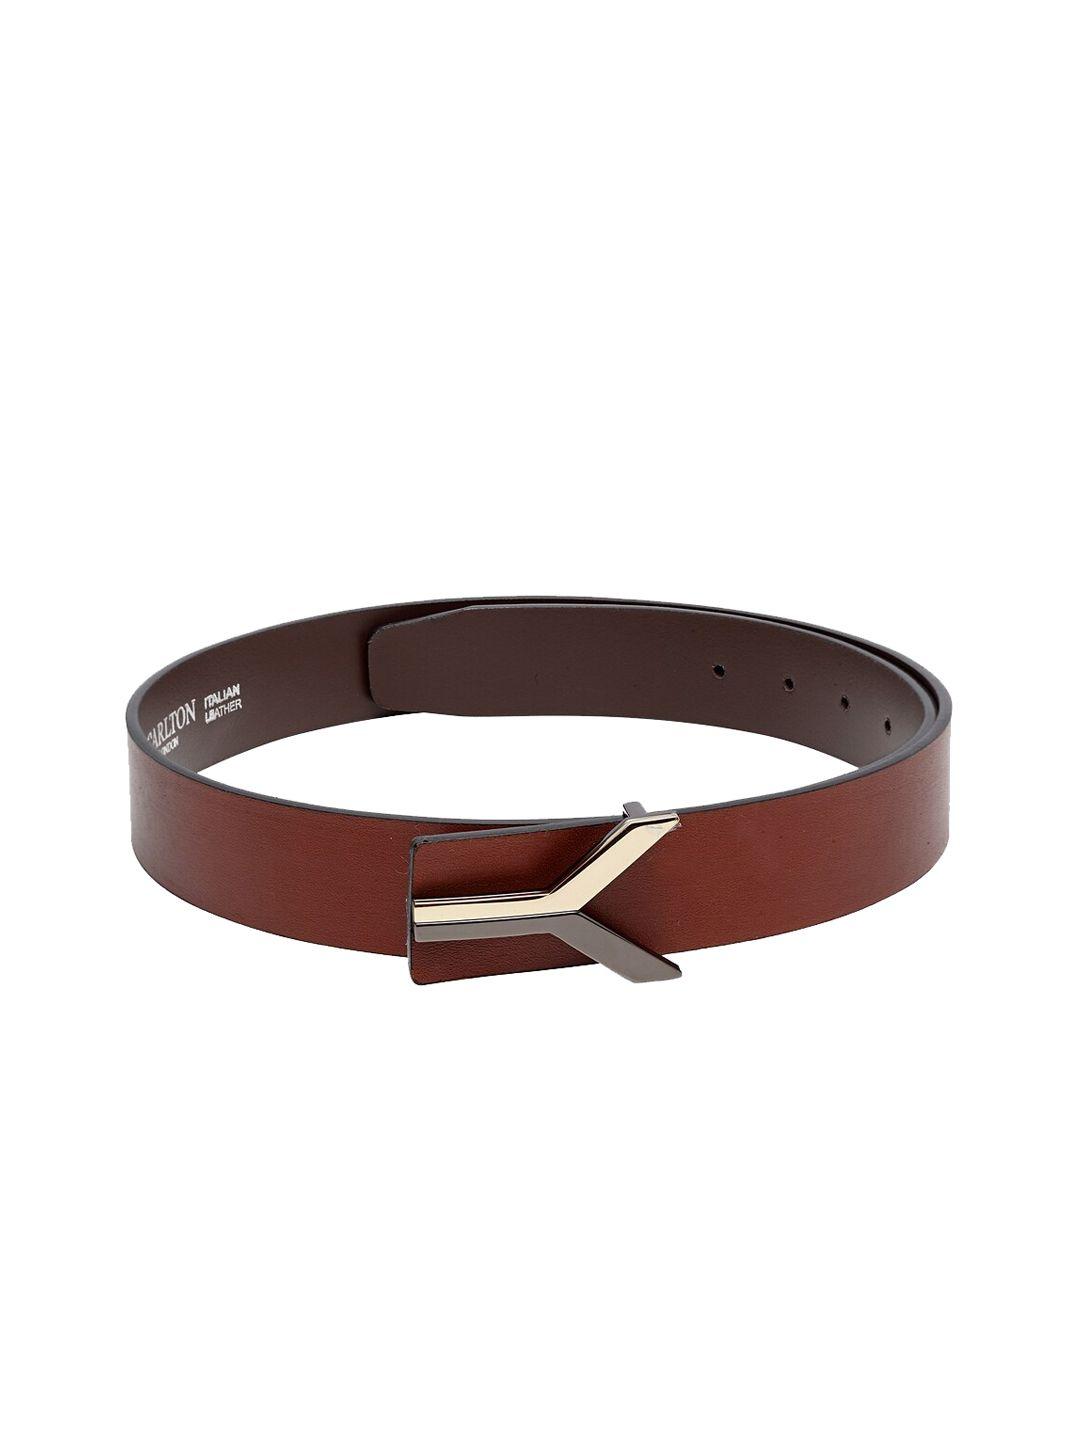 carlton london men rust brown solid leather belt